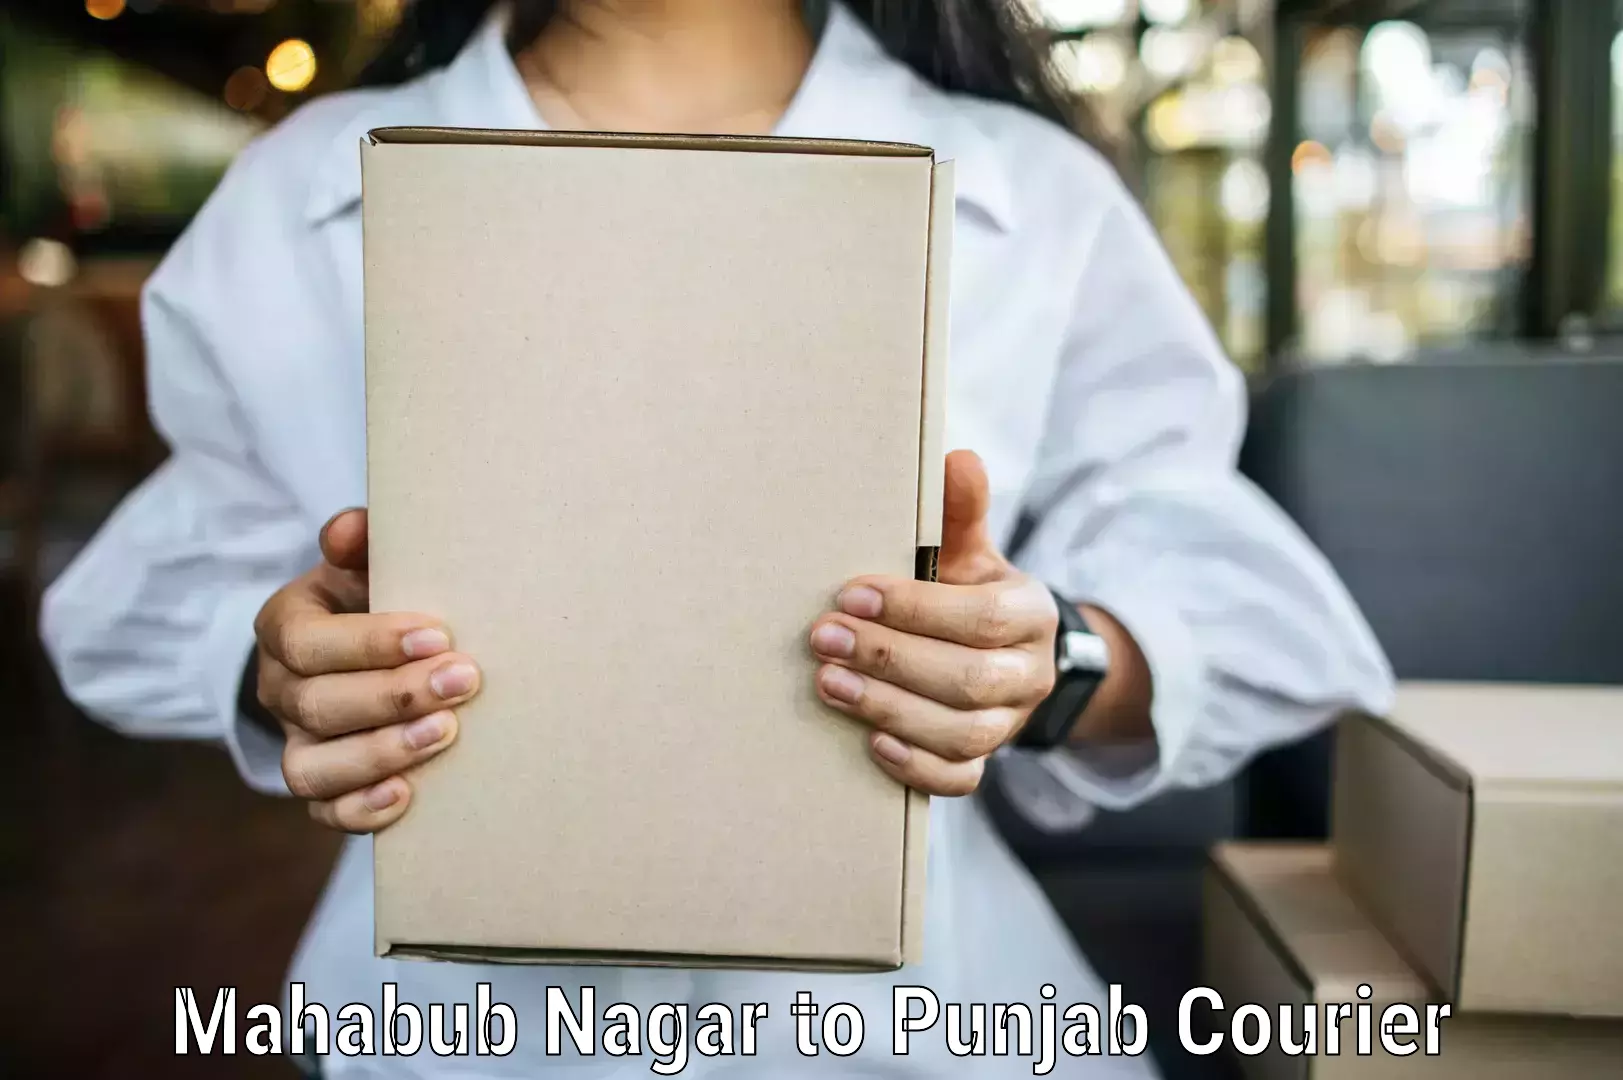 Courier service comparison Mahabub Nagar to Amritsar